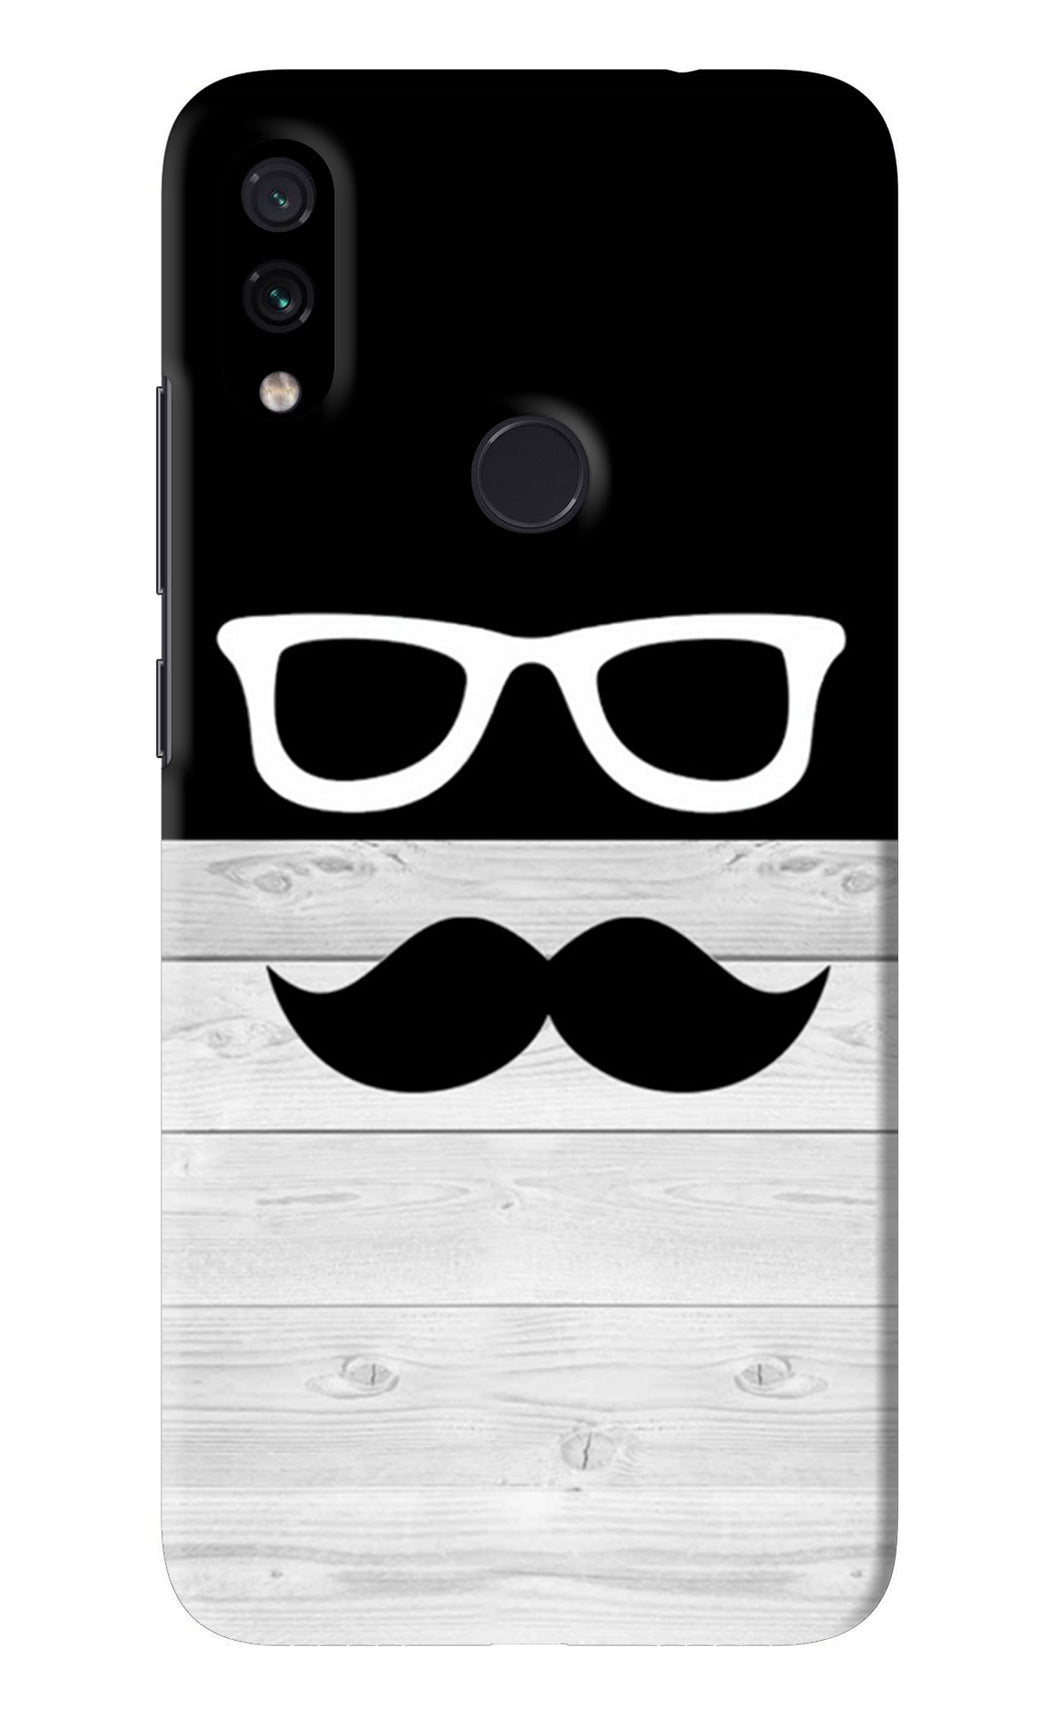 Mustache Xiaomi Redmi Note 7 Back Skin Wrap